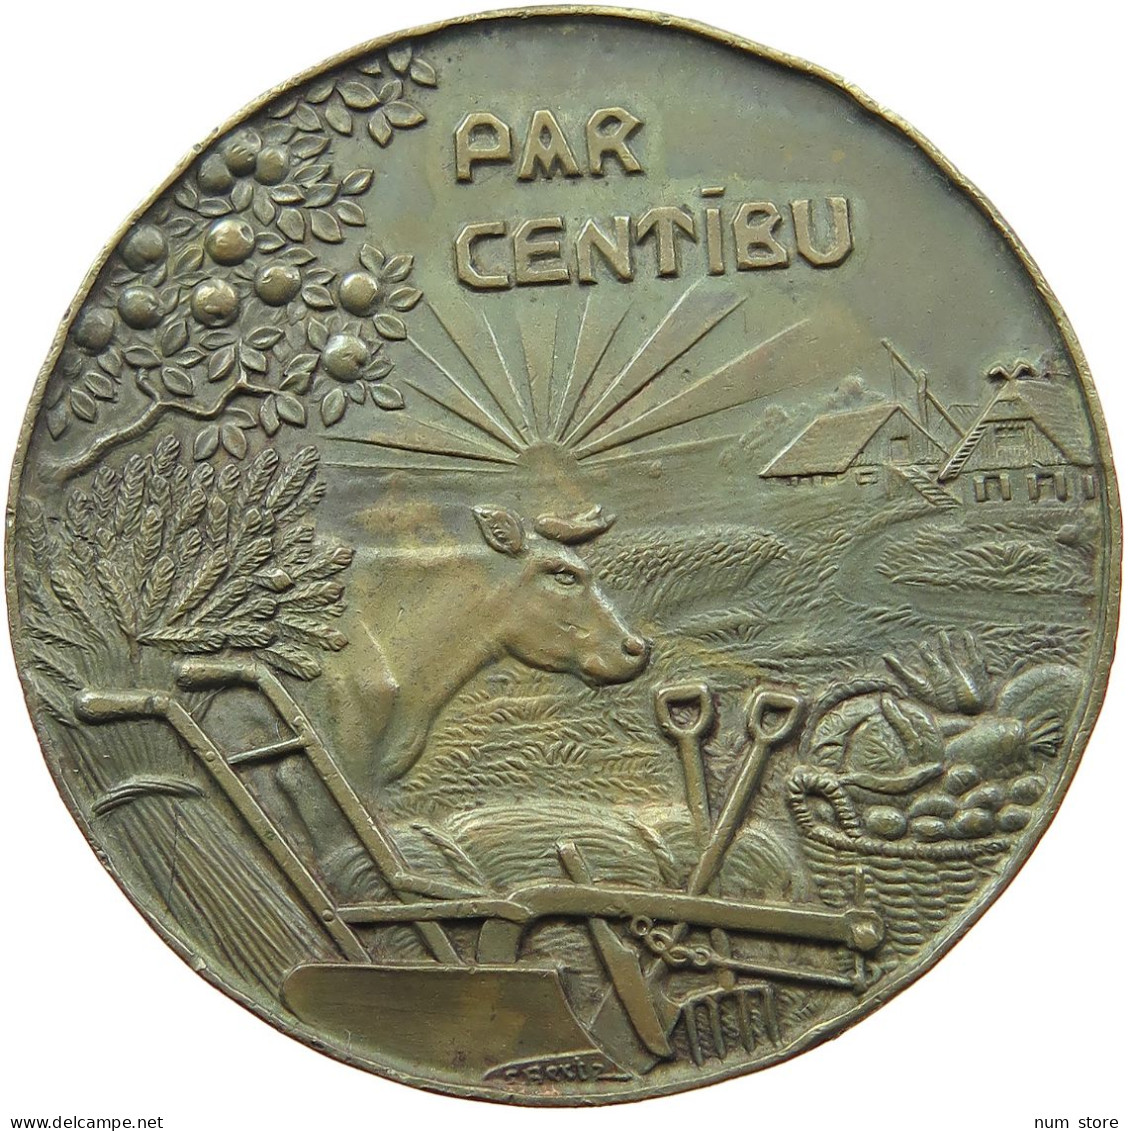 LATVIA Medaille 1930 Bertz, Landwirtschaftmedaille, Zemkopibas Ministrija #sm09 0055 - Latvia